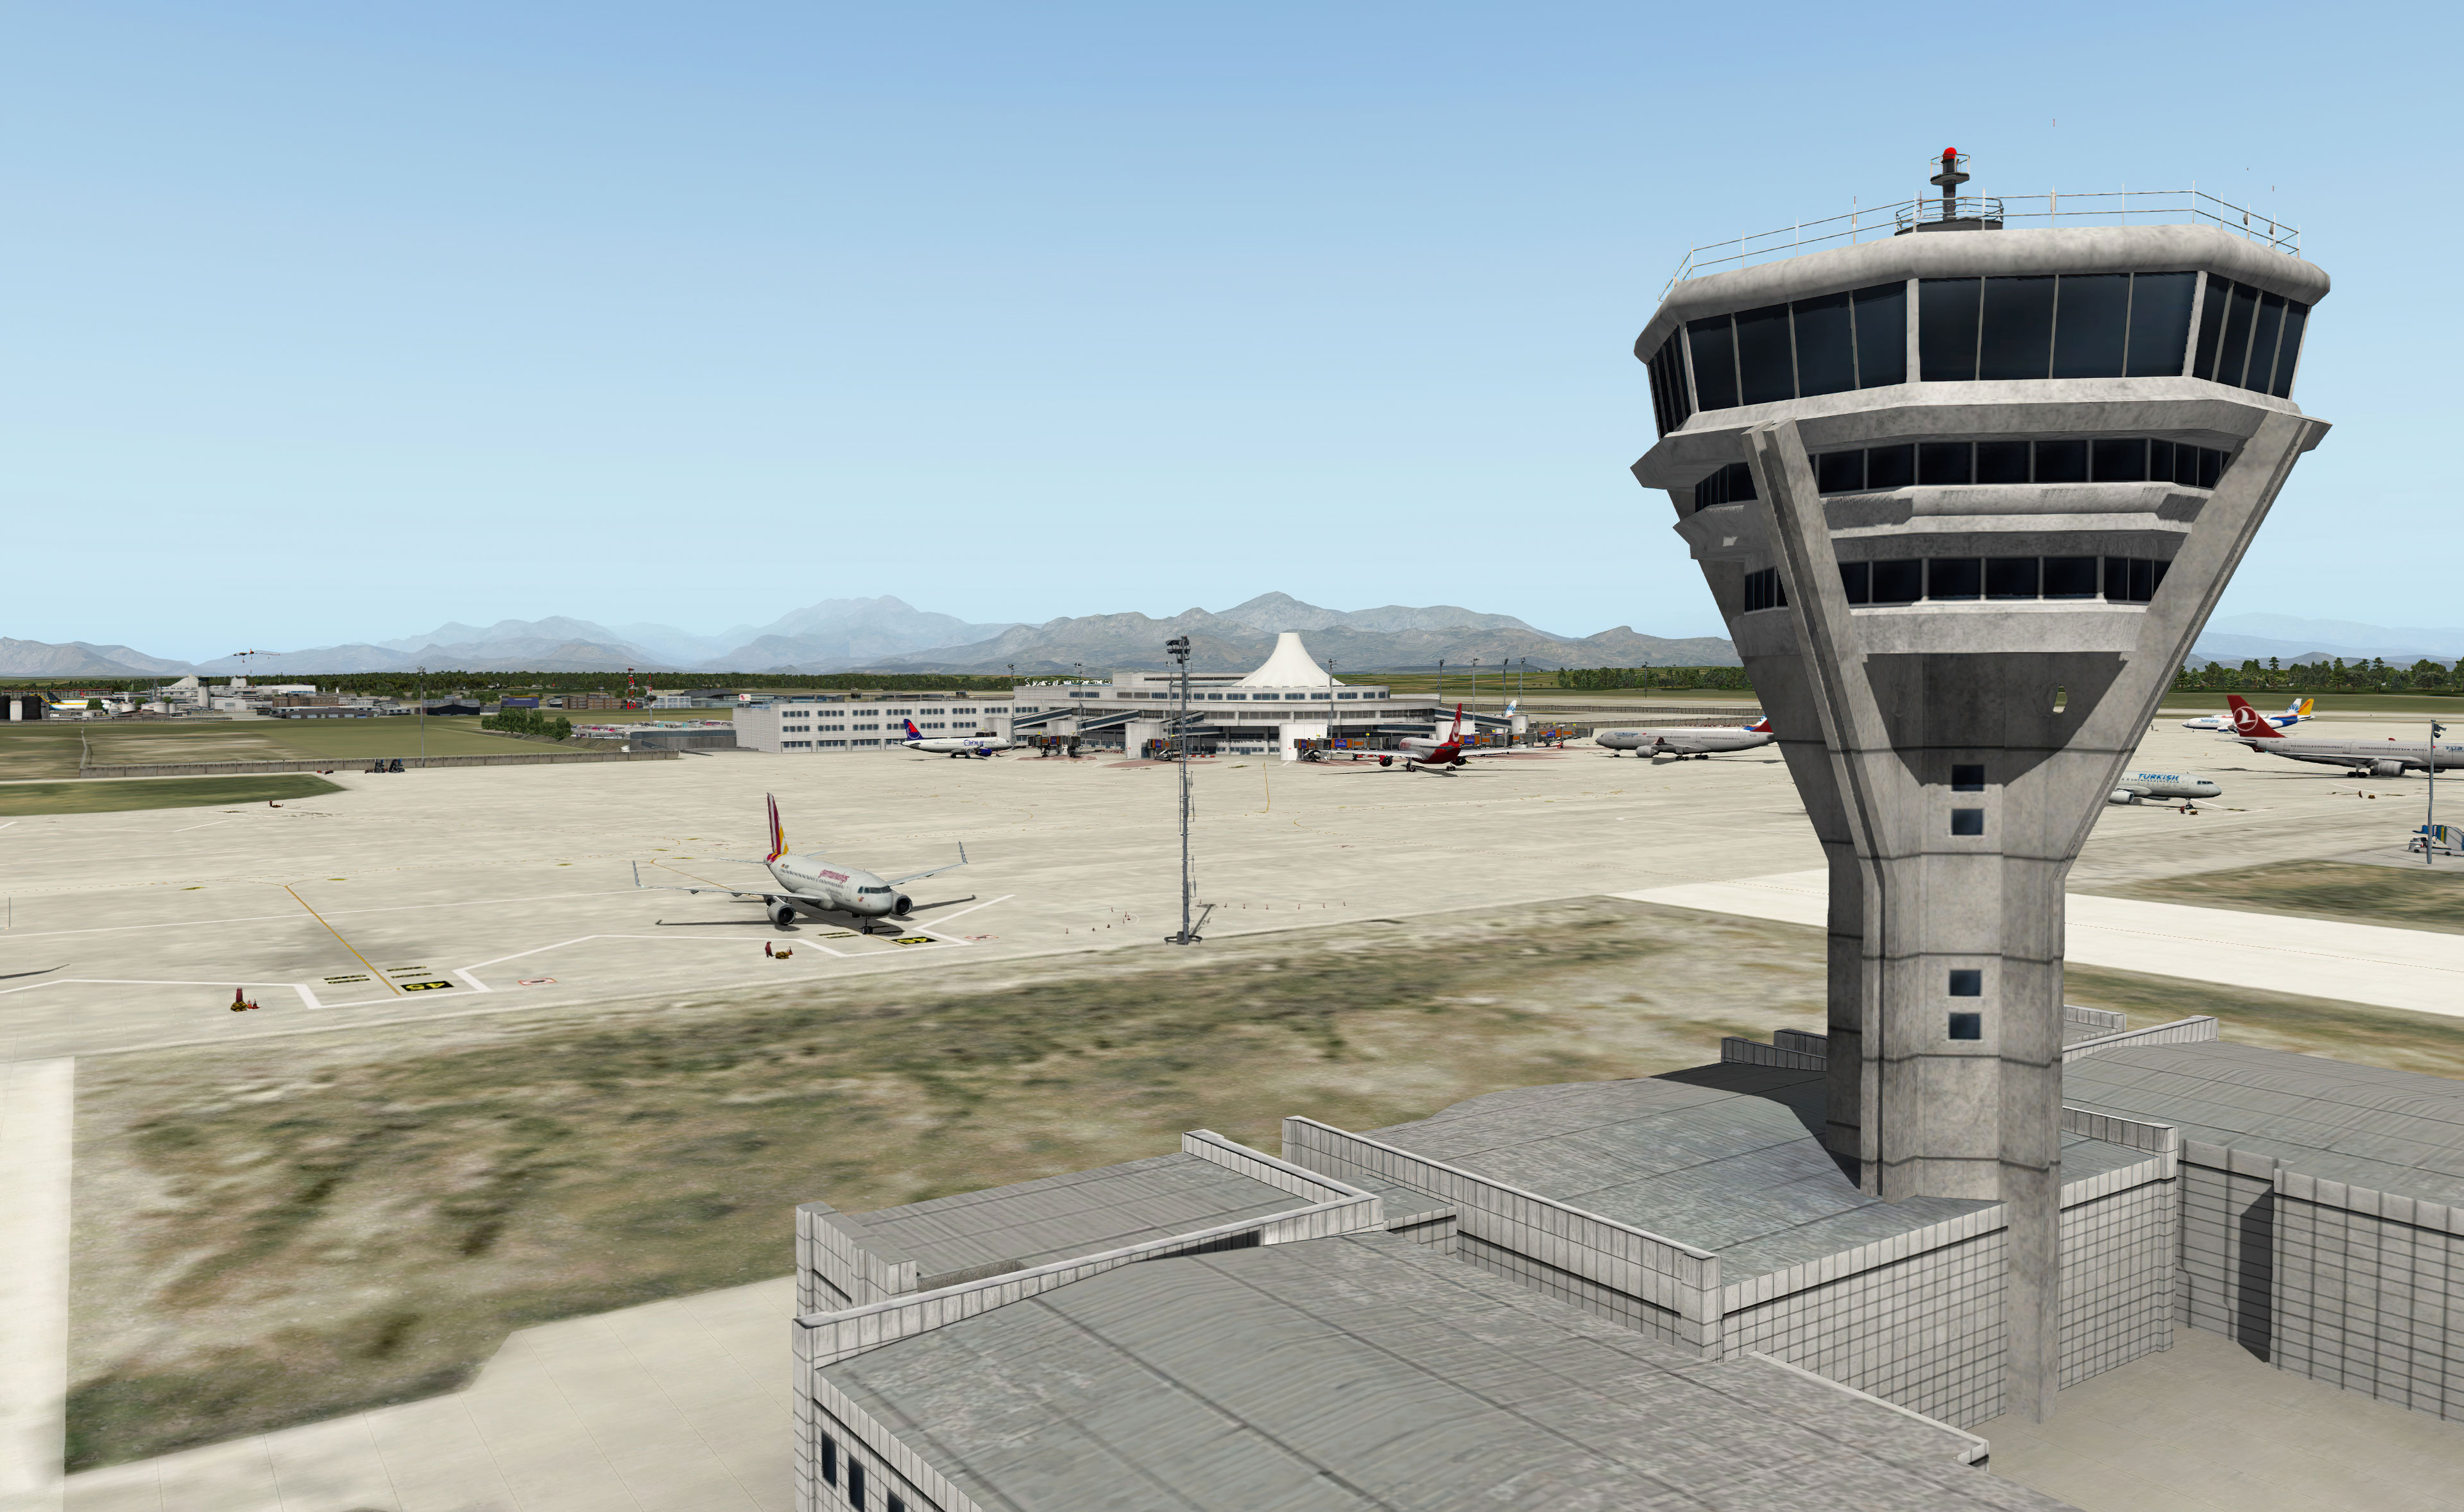 Airport Antalya Scenery for X-Plane by Aerosoft